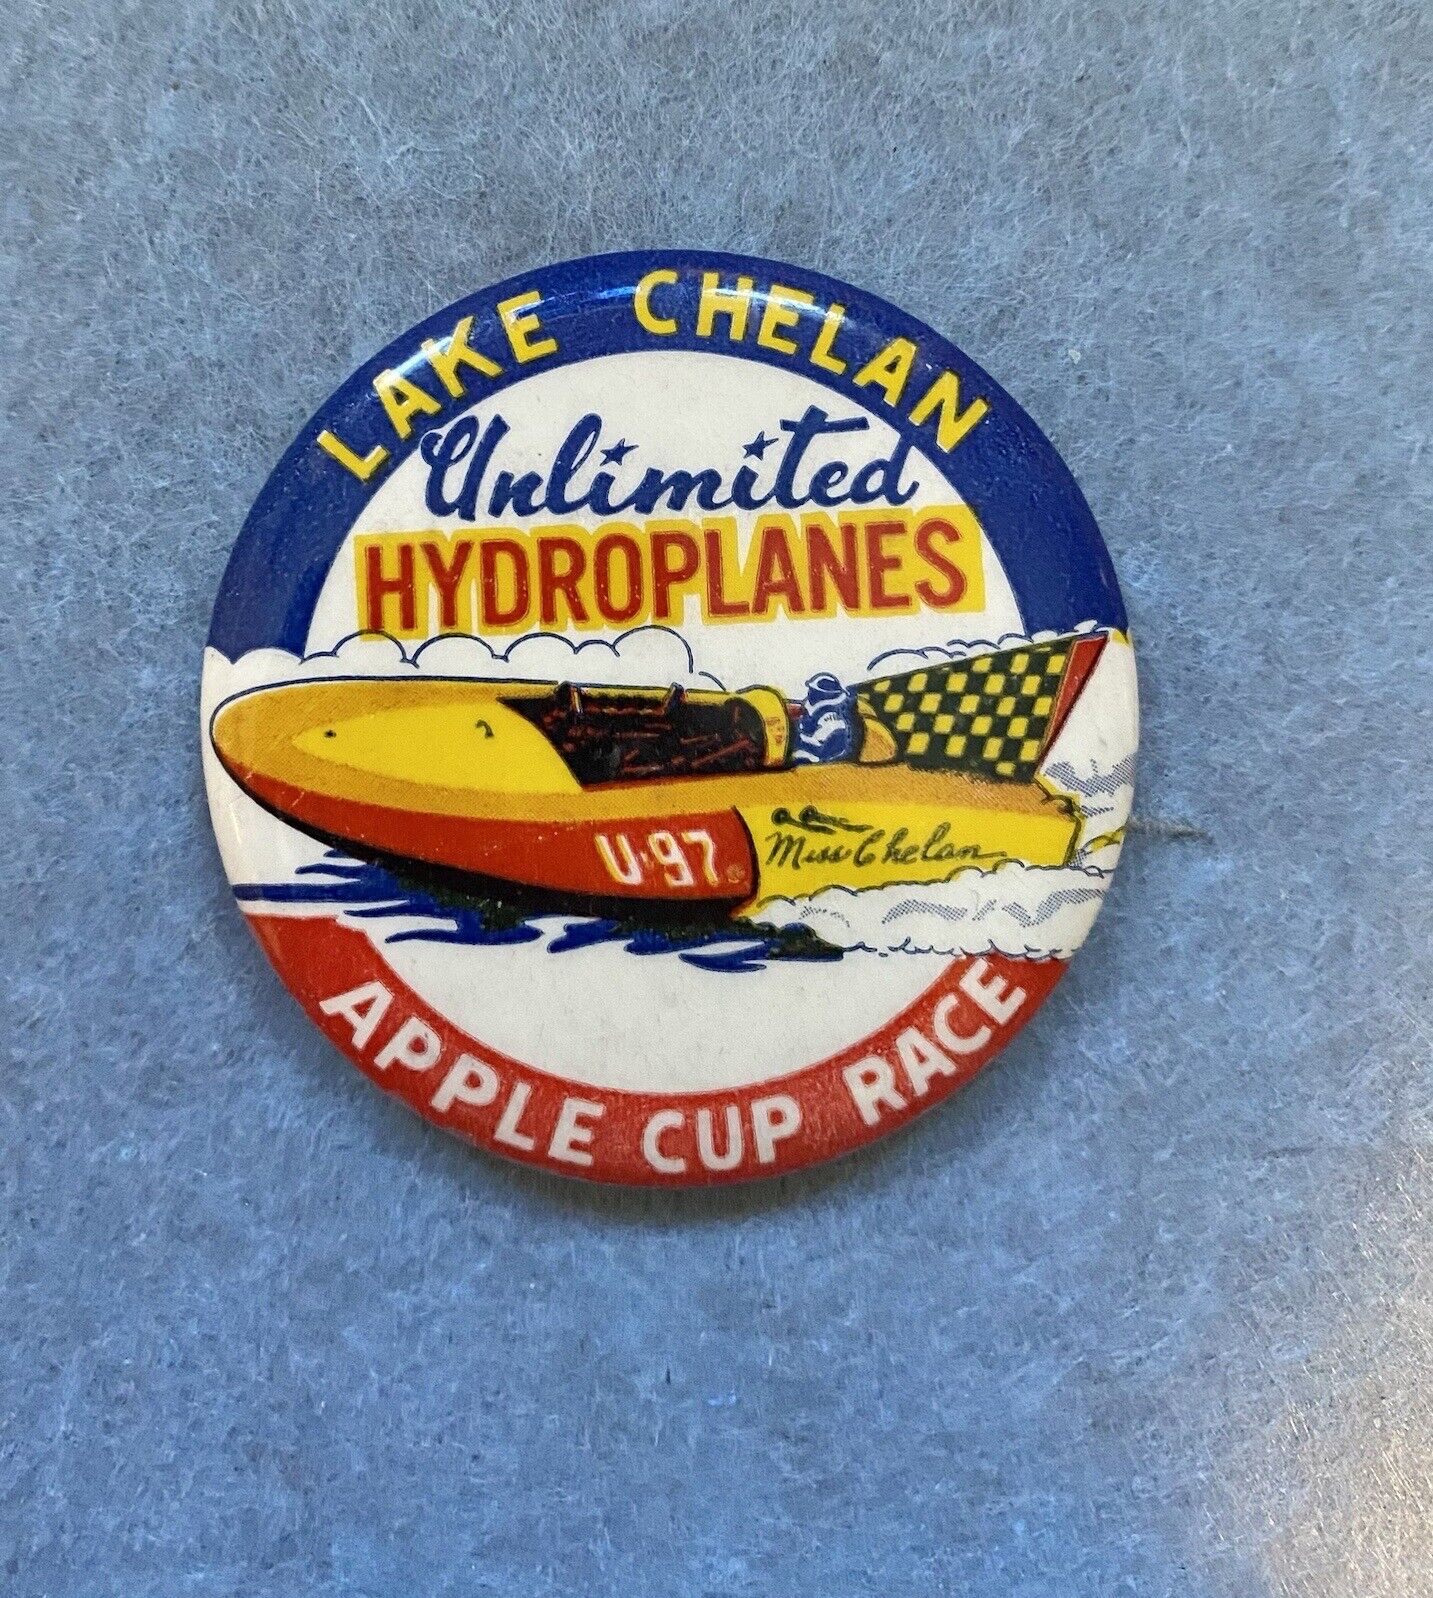 Lake Chelan Washington Apple Cup Race Unlimited Hydroplanes Vintage Pinback